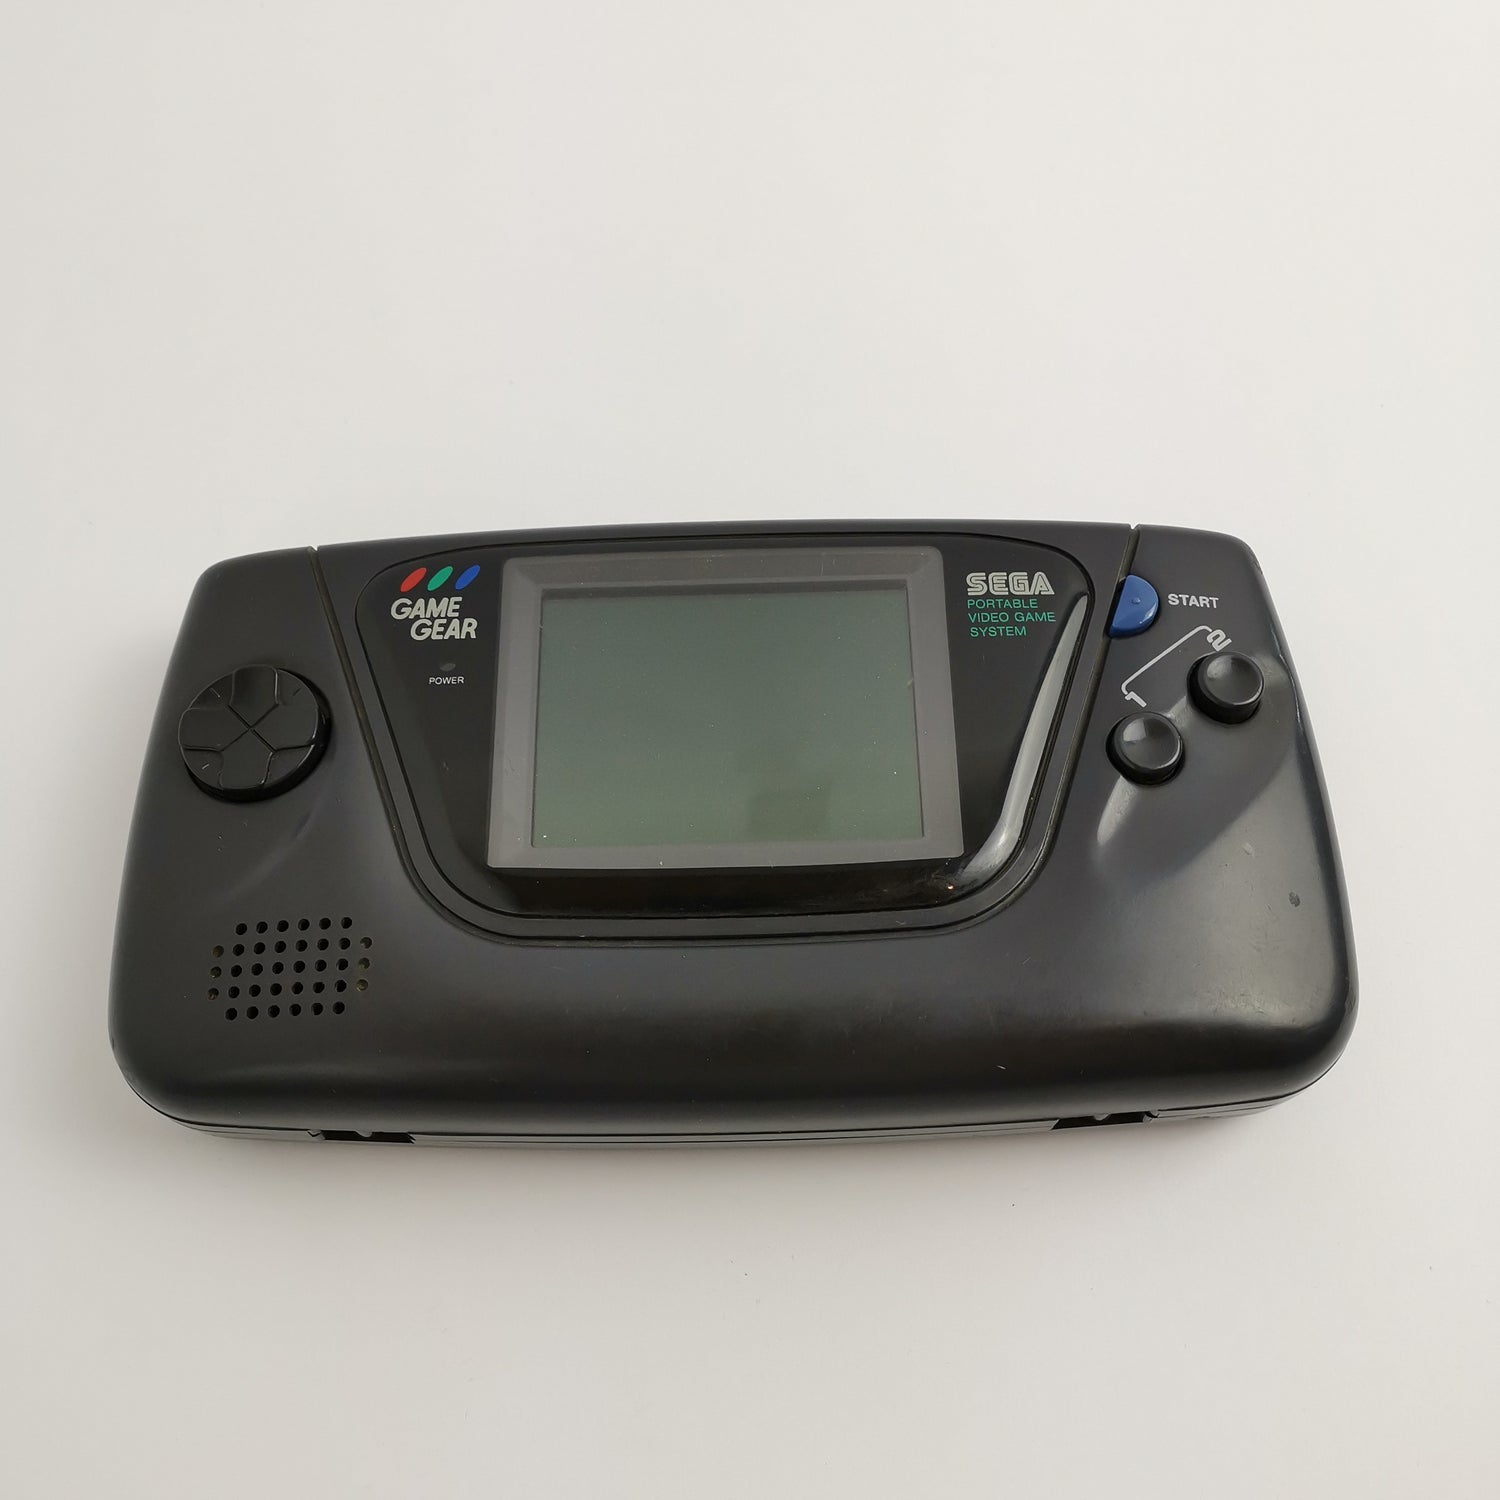 Sega Game Gear Handheld Console | Defective replacement part - GameGear